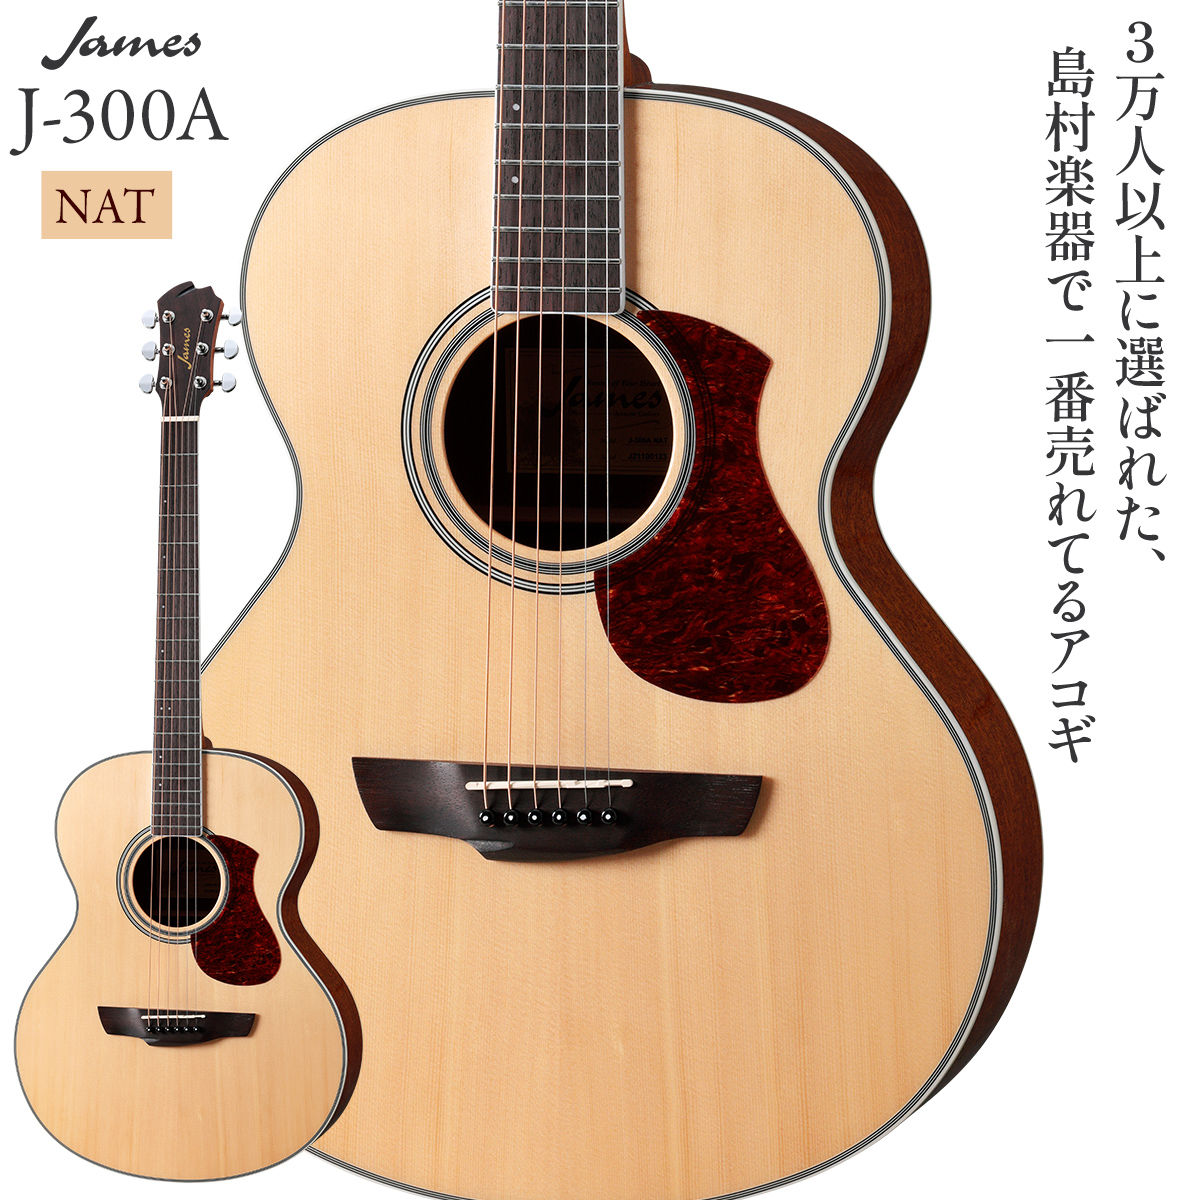 James J-300A NAT(ナチュラル) アコースティックギター 【ジェームス 